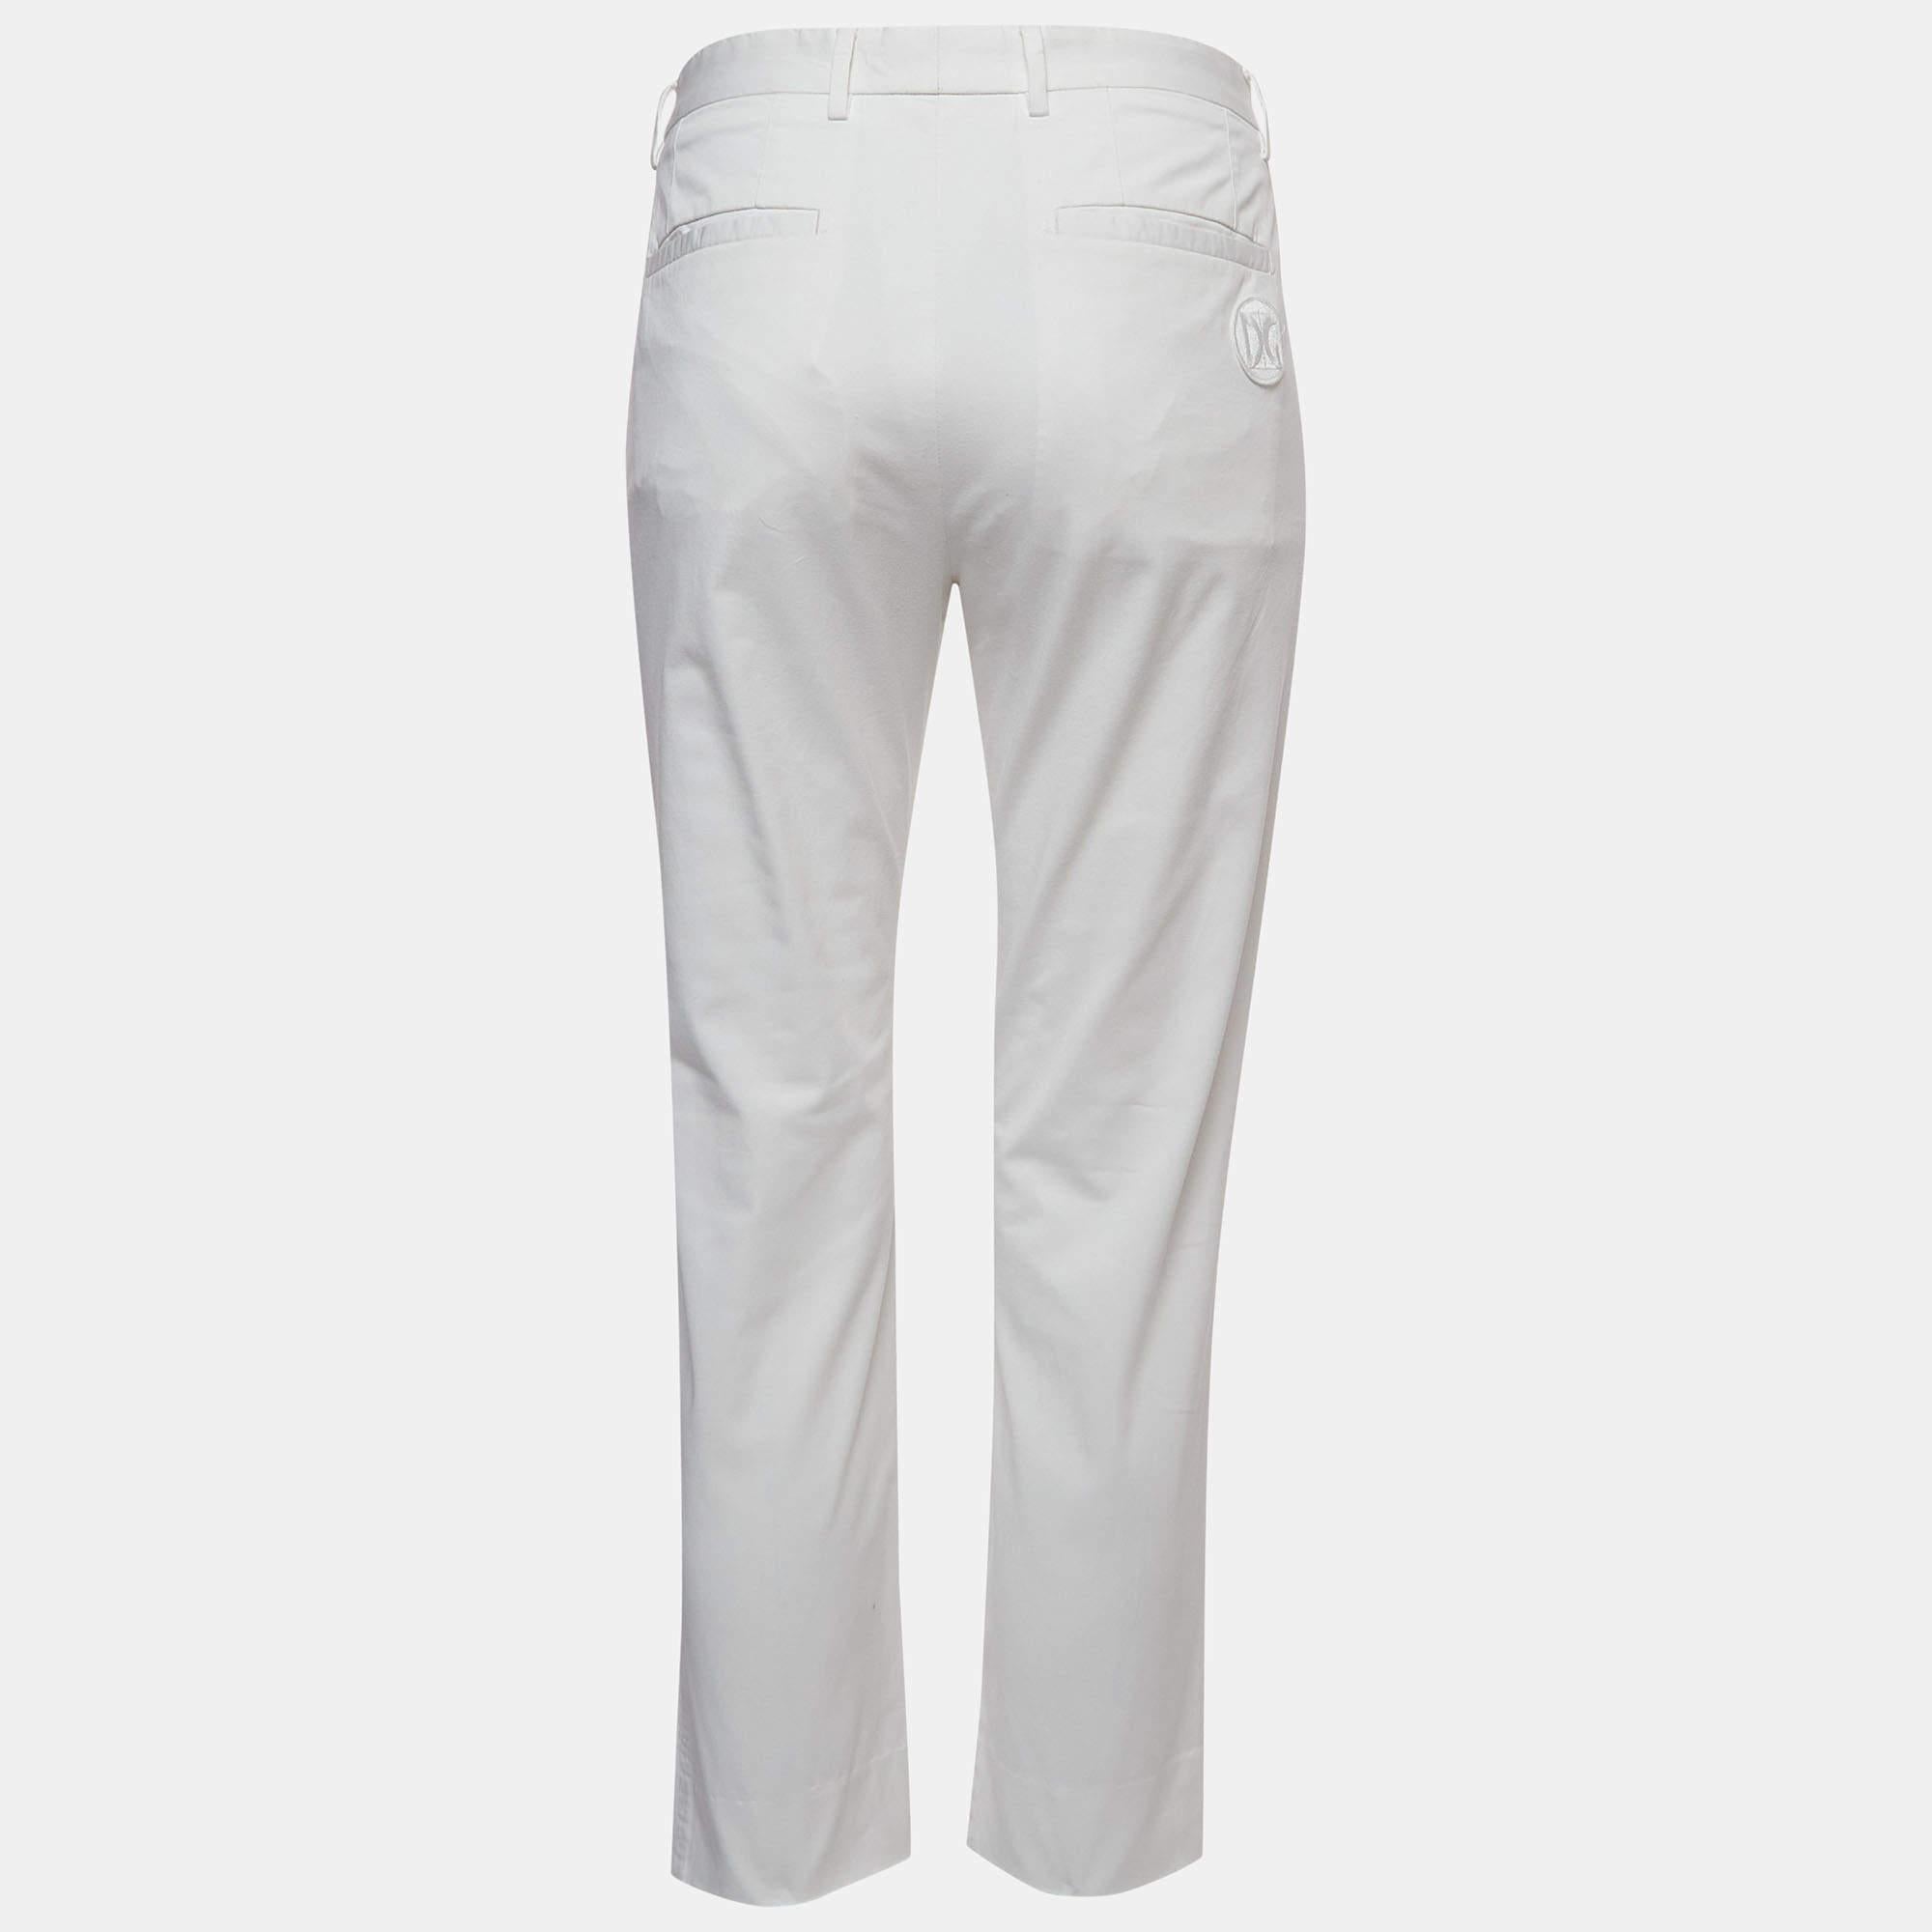 Dolce & Gabbana White Cotton Straight Fit Trousers L In Excellent Condition For Sale In Dubai, Al Qouz 2